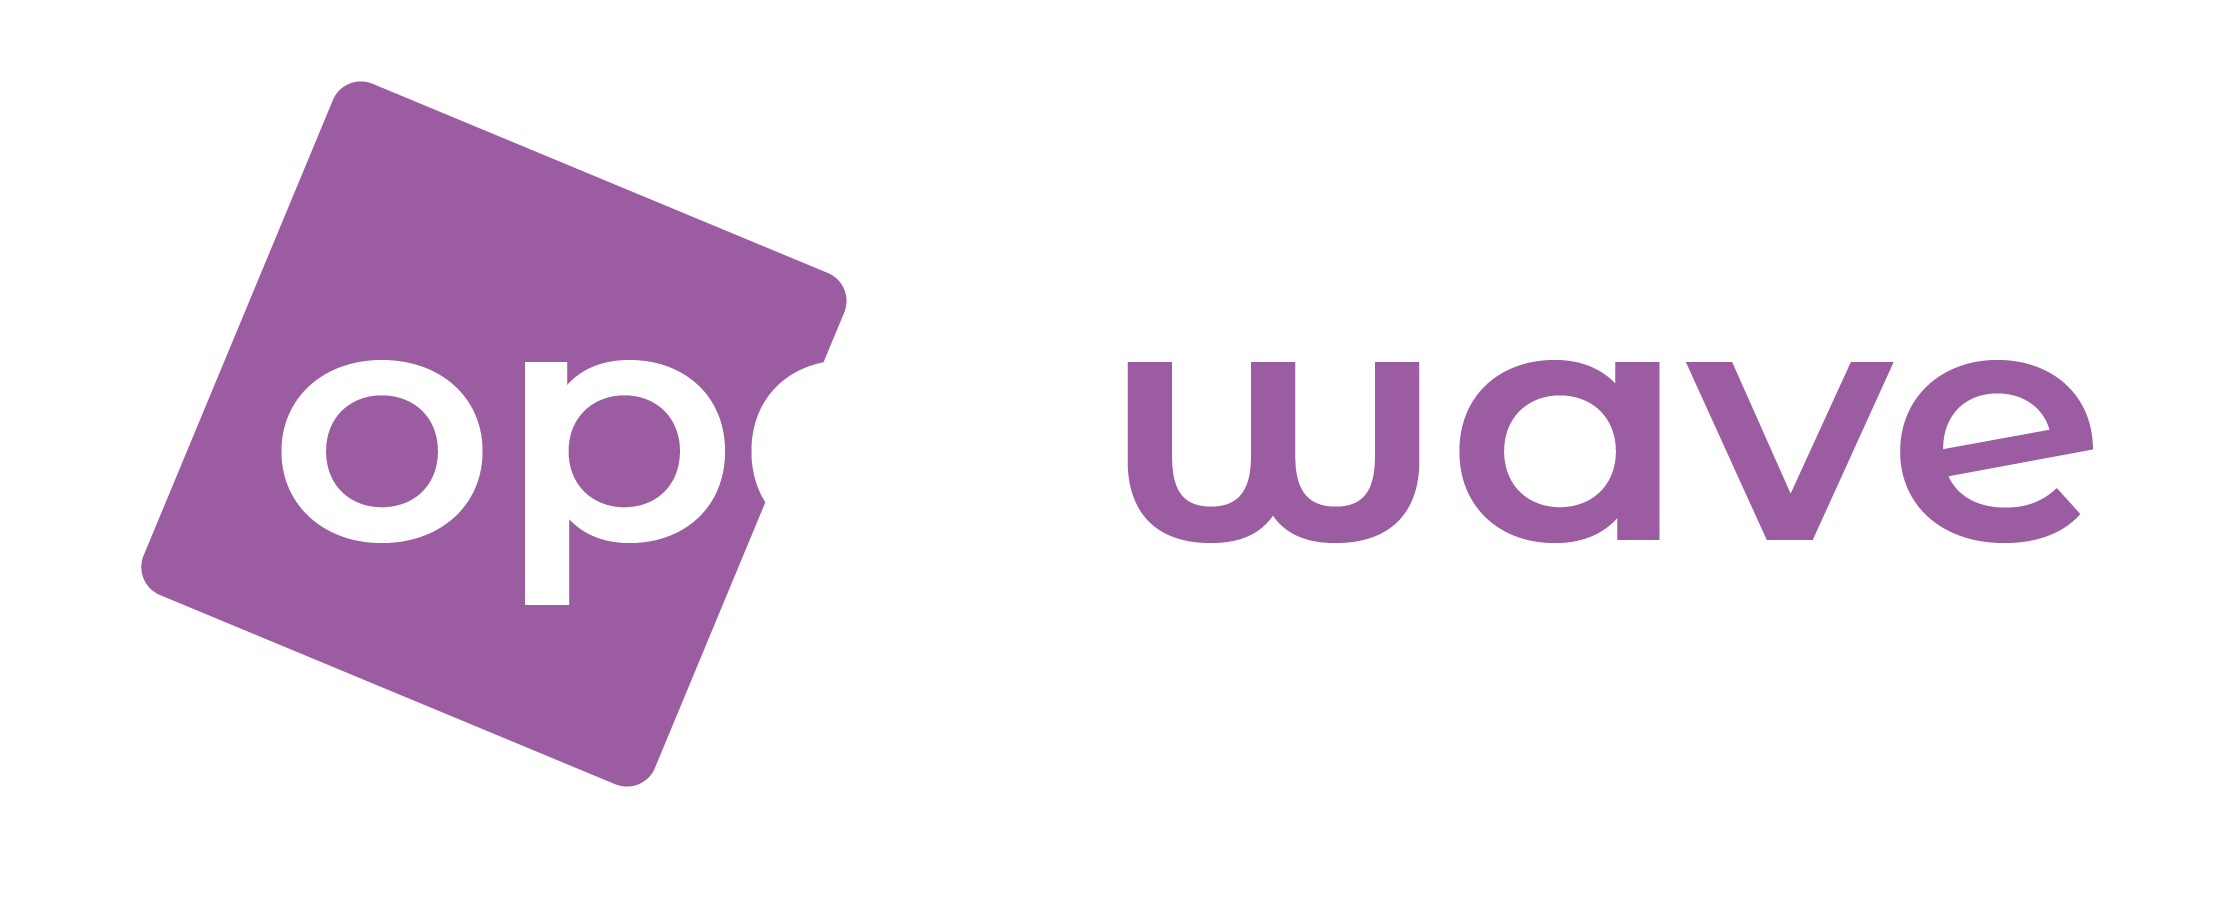 OWS logo_white_purple sq